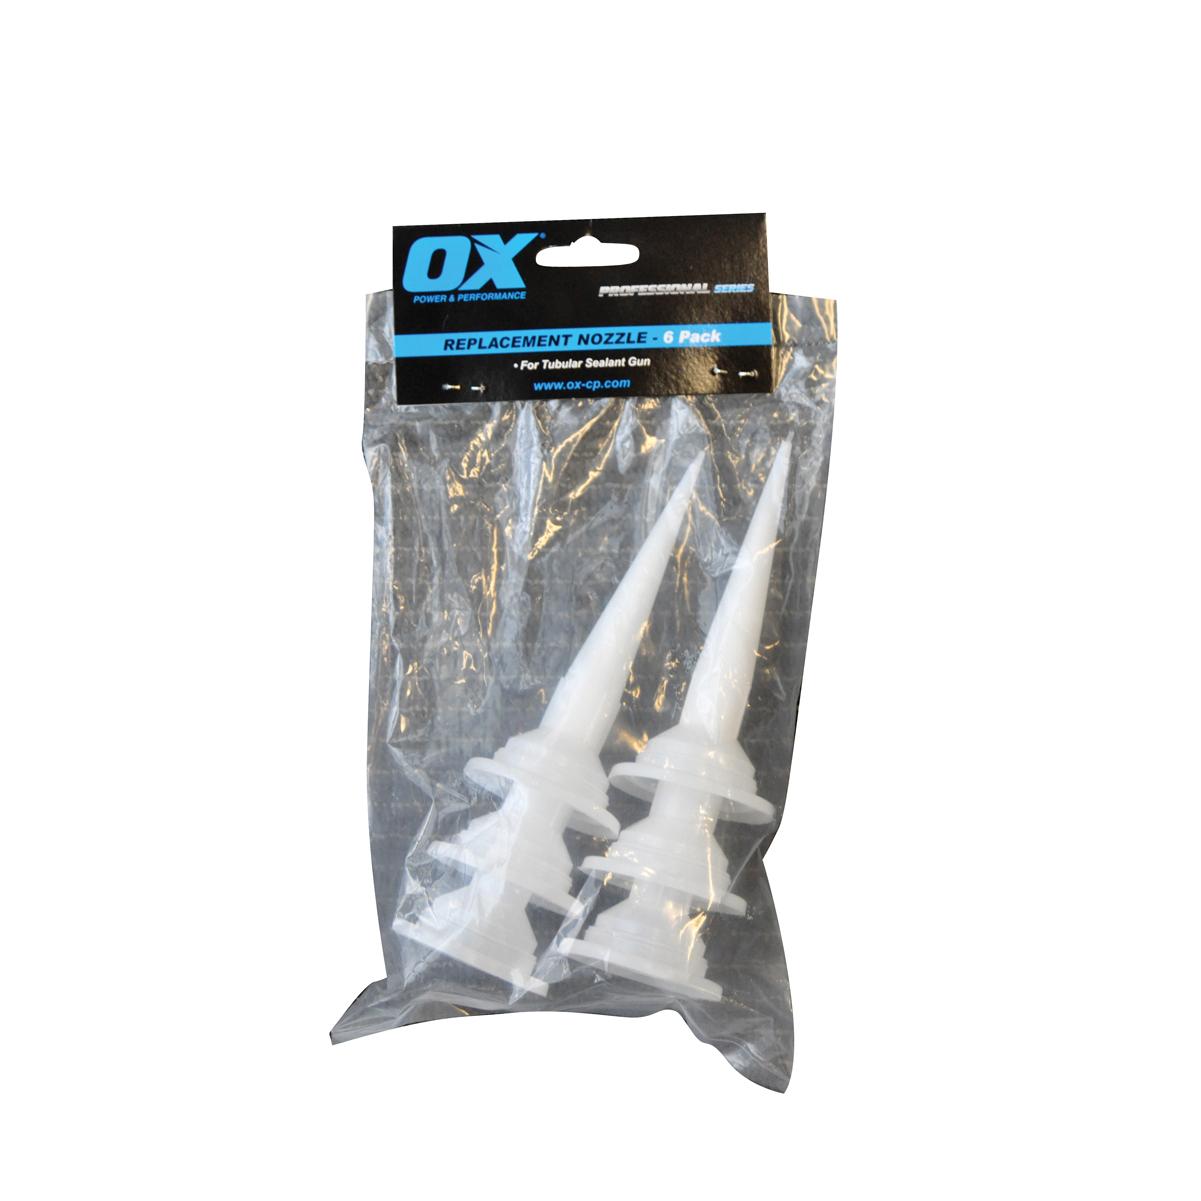 OX Professional Sealant Gun Tips 6pk